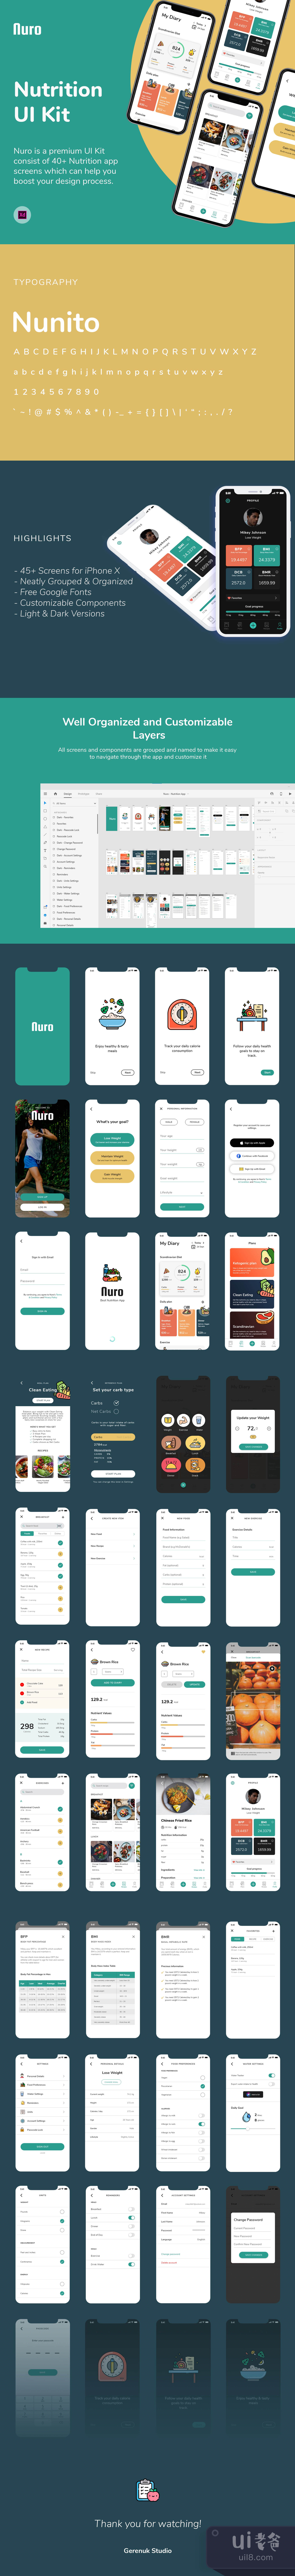 Nuro 运动健康App设计插图